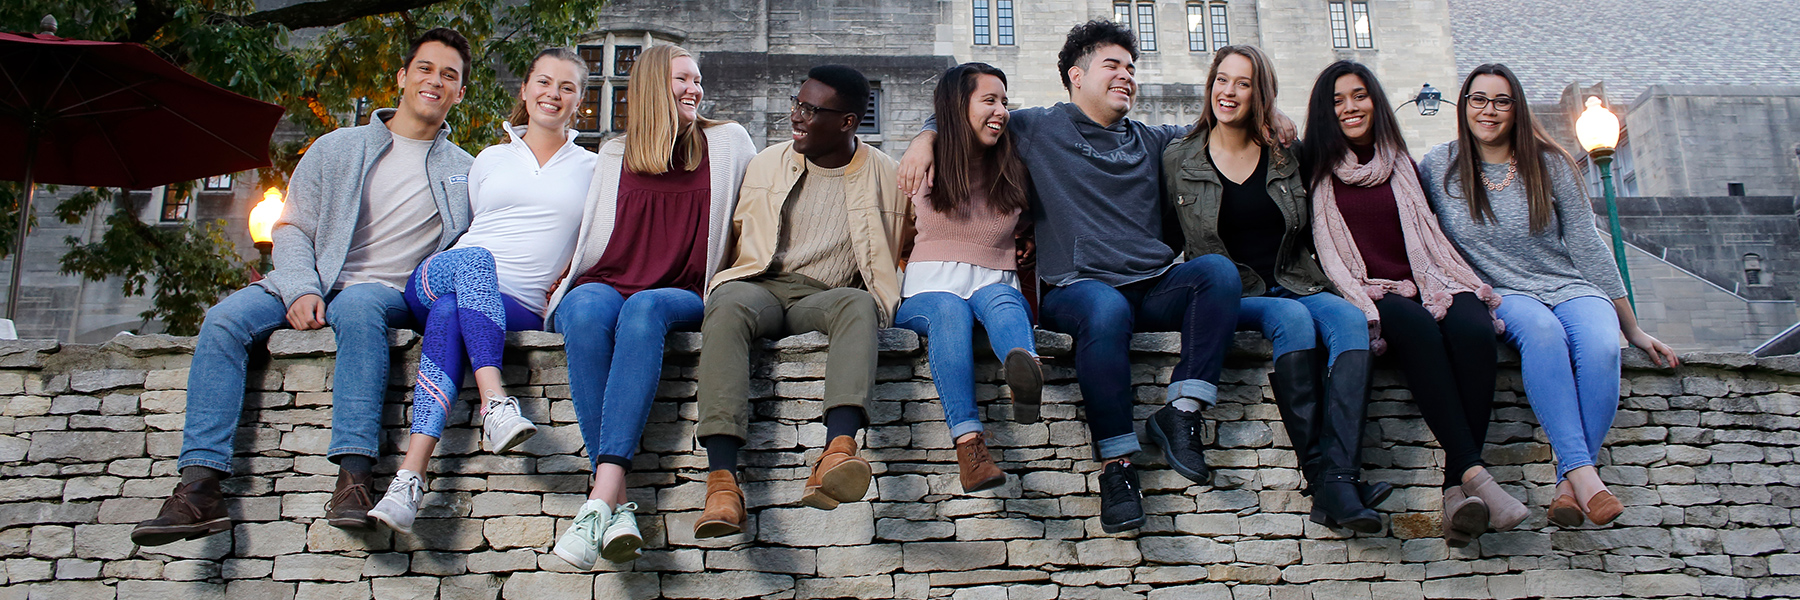 Friendly students on a limestone wall